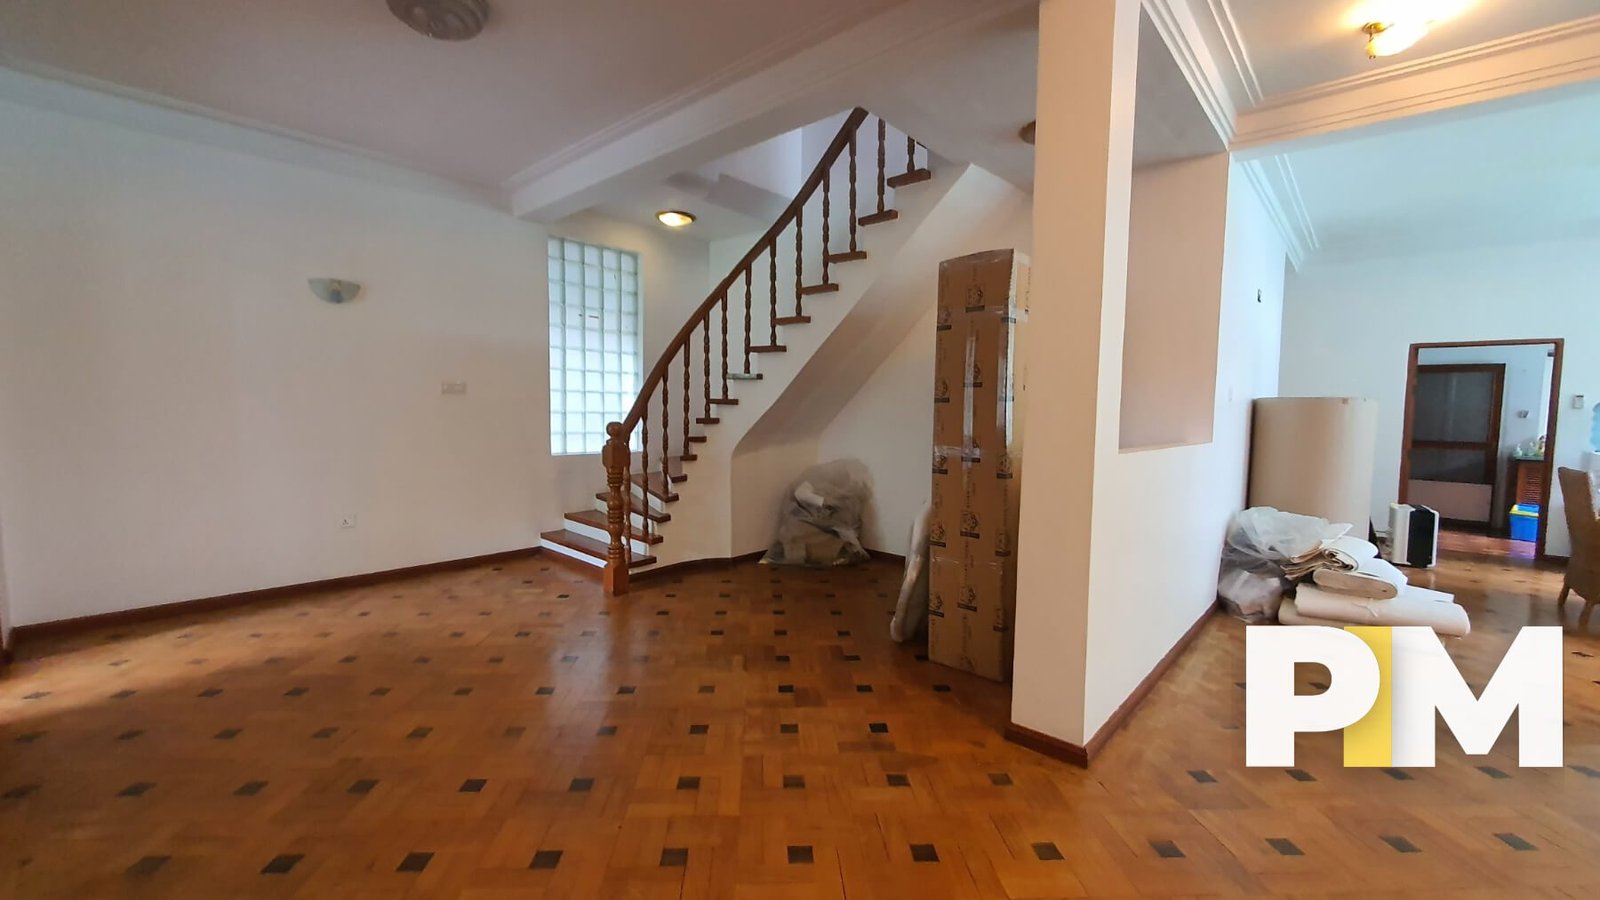 Living Room - Myanmar Real Estate